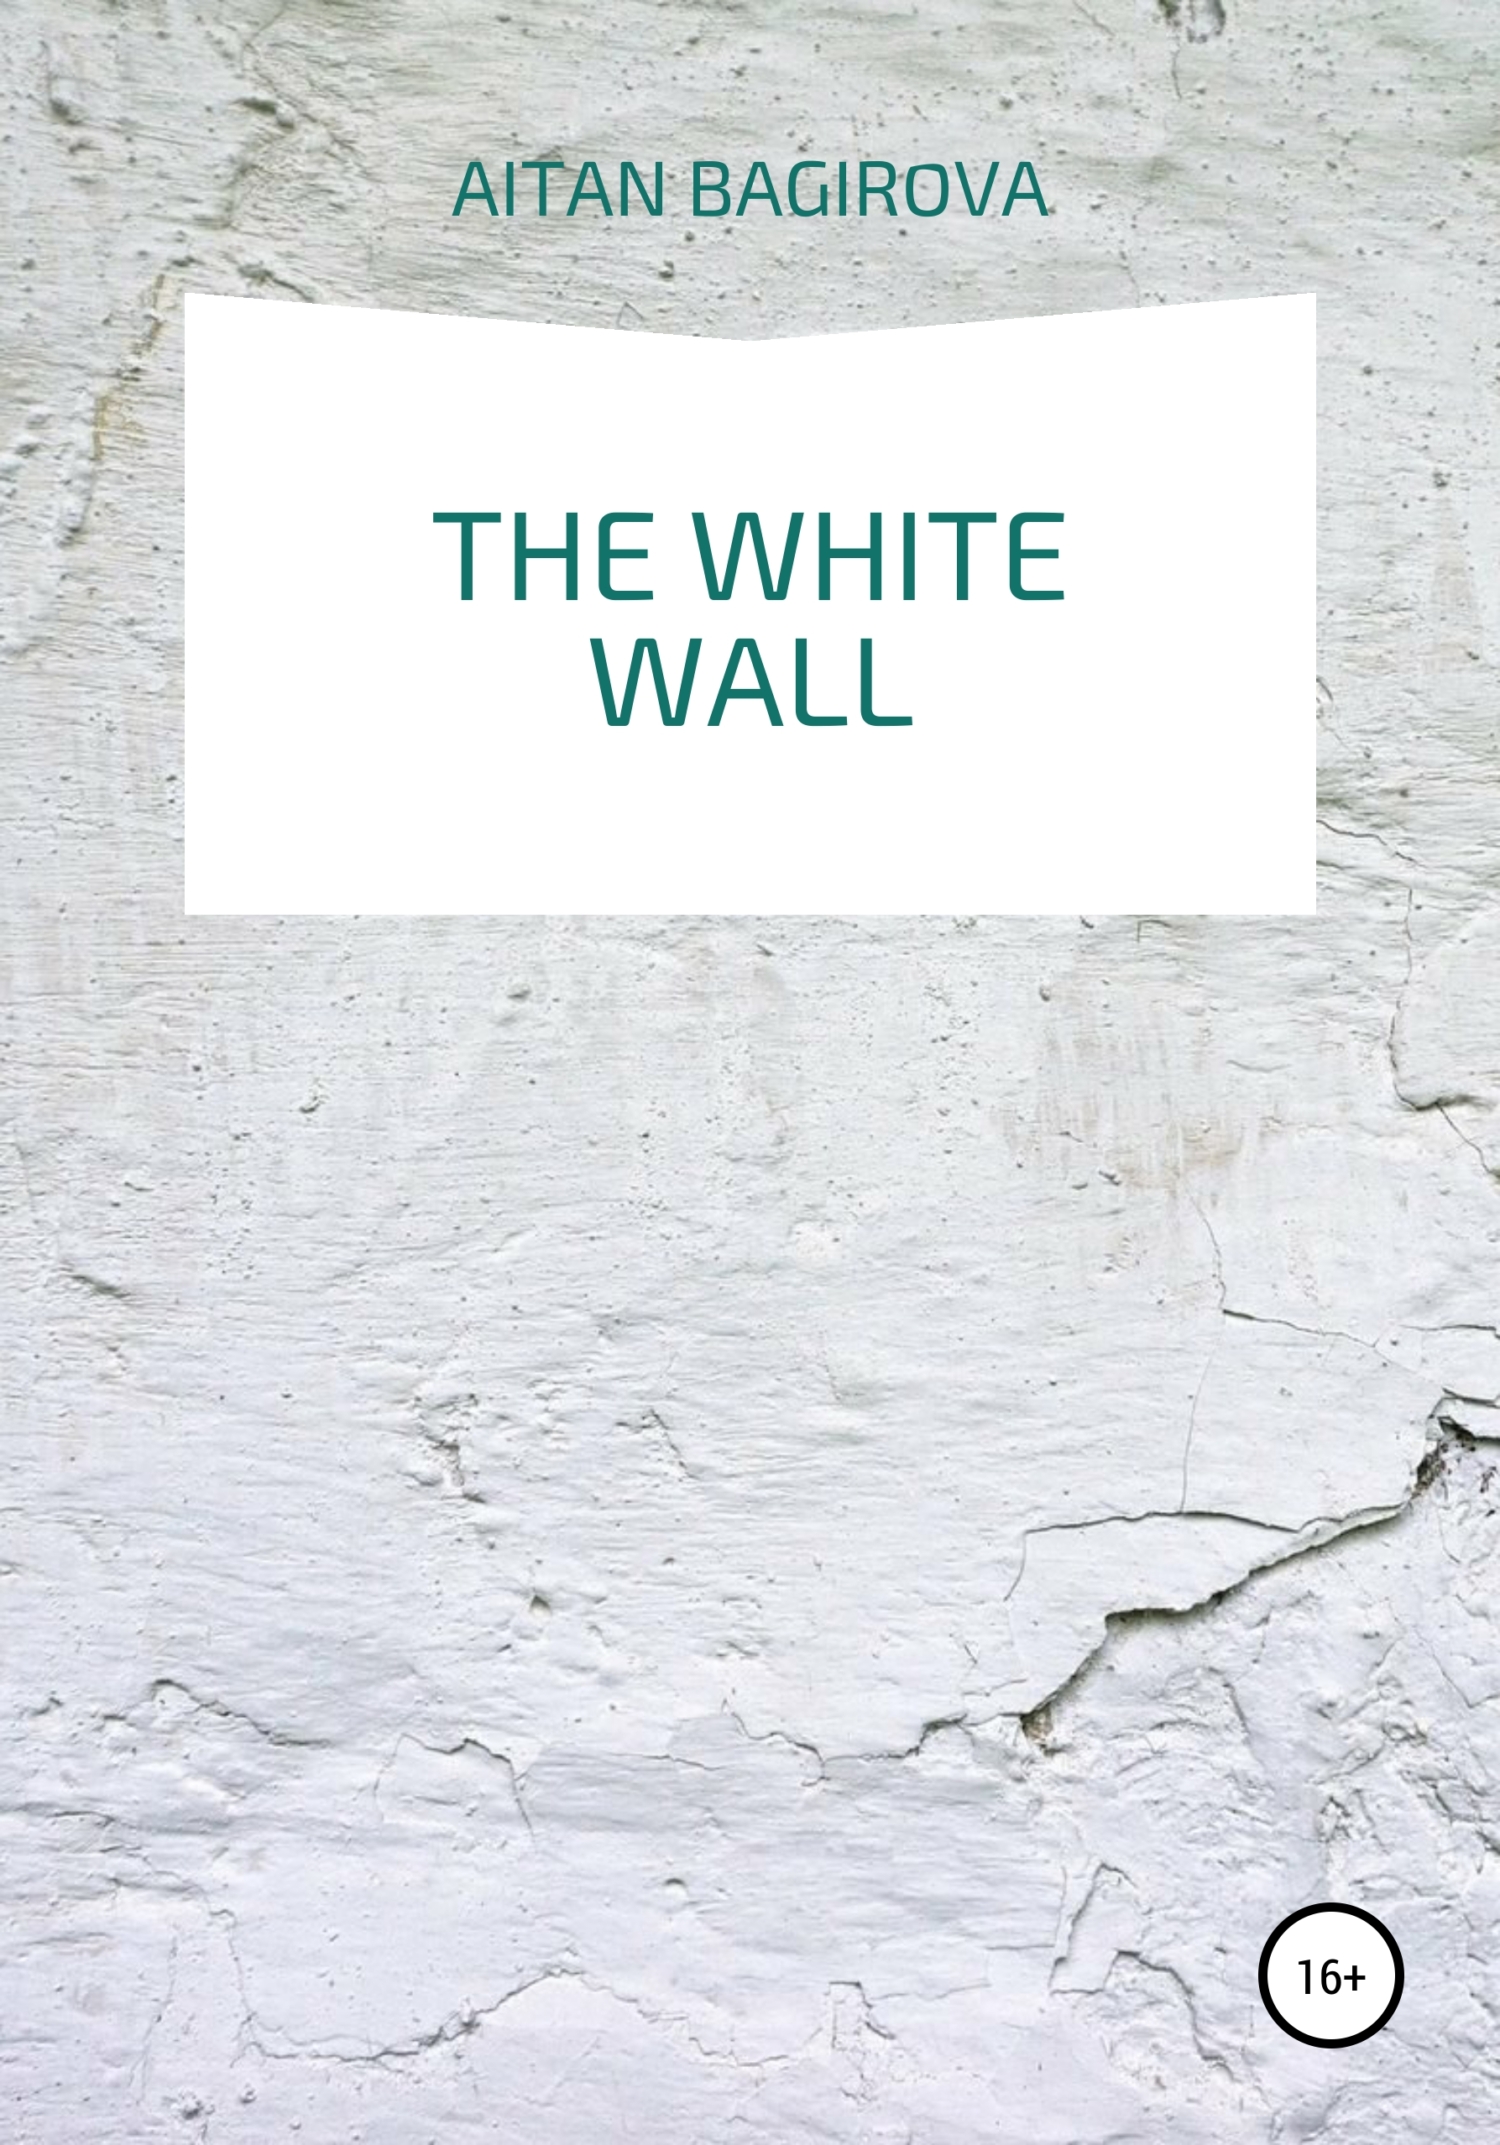 The white wall - Aitan Bagirova